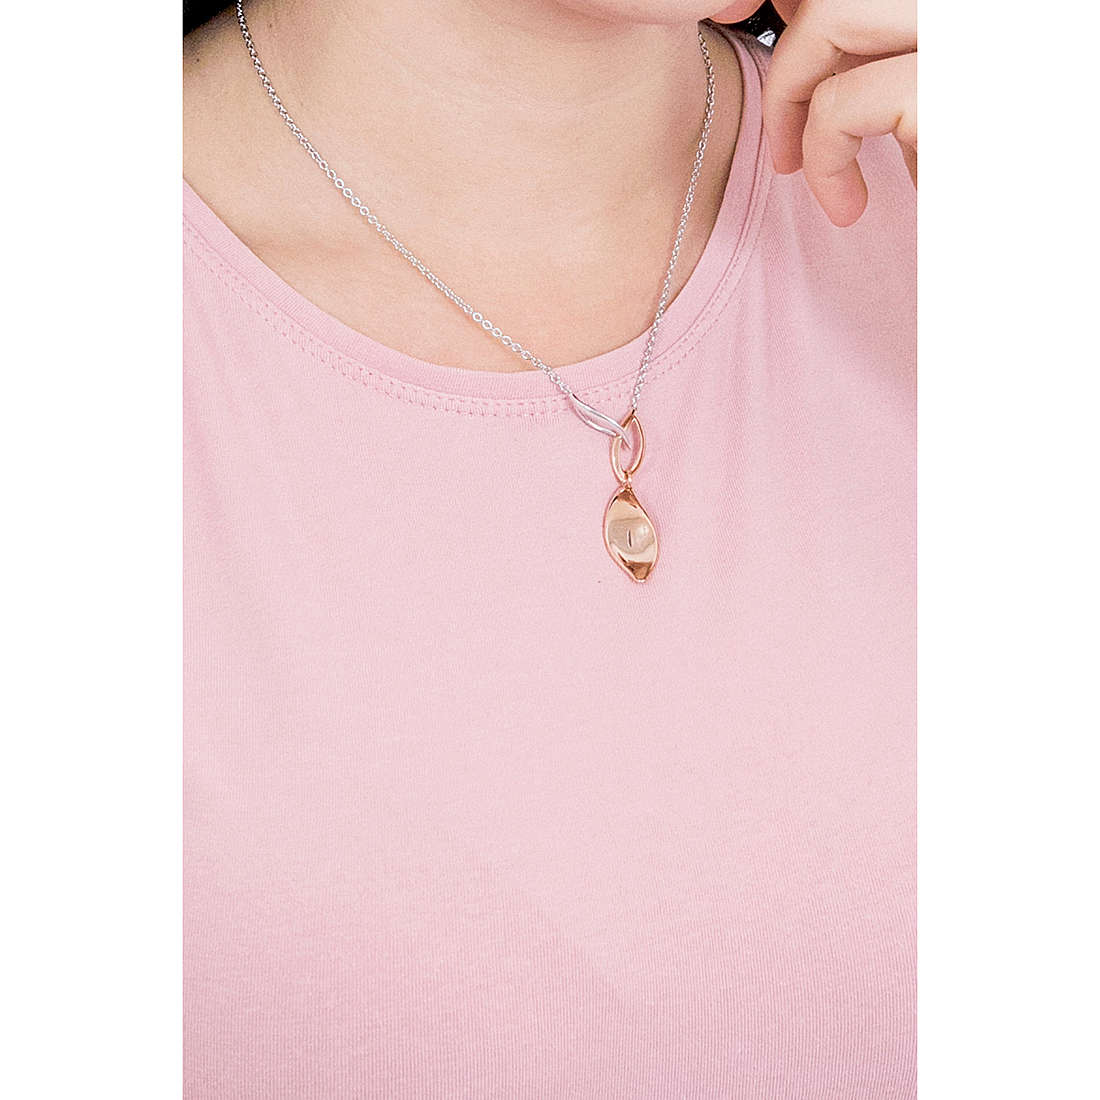 Morellato necklaces Foglia woman SAKH46 wearing